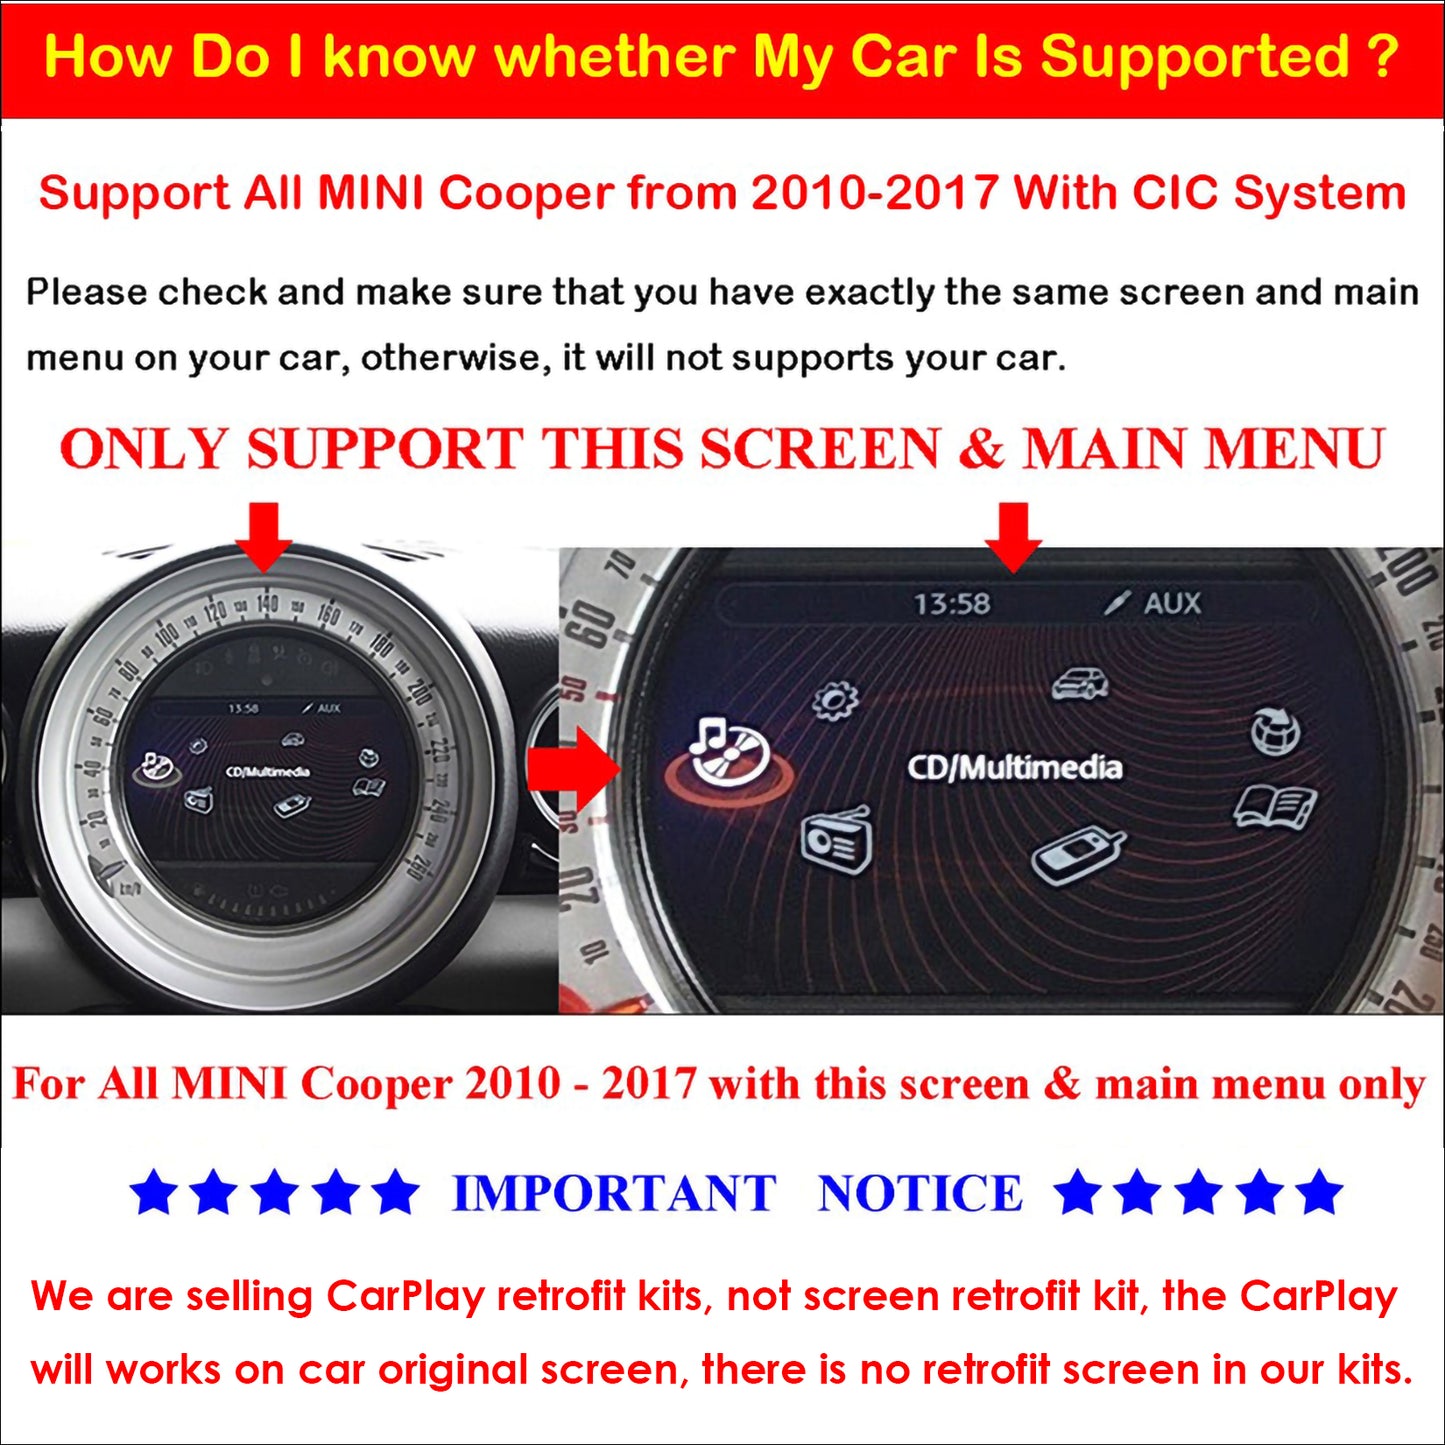 CarProKit Wireless CarPlay Android Auto AirPlay USB Mirroring Retrofit Kit for Mini Cooper F54 F55 F56 F57 R58 R59 R60 R61 with CIC System 2010-2017